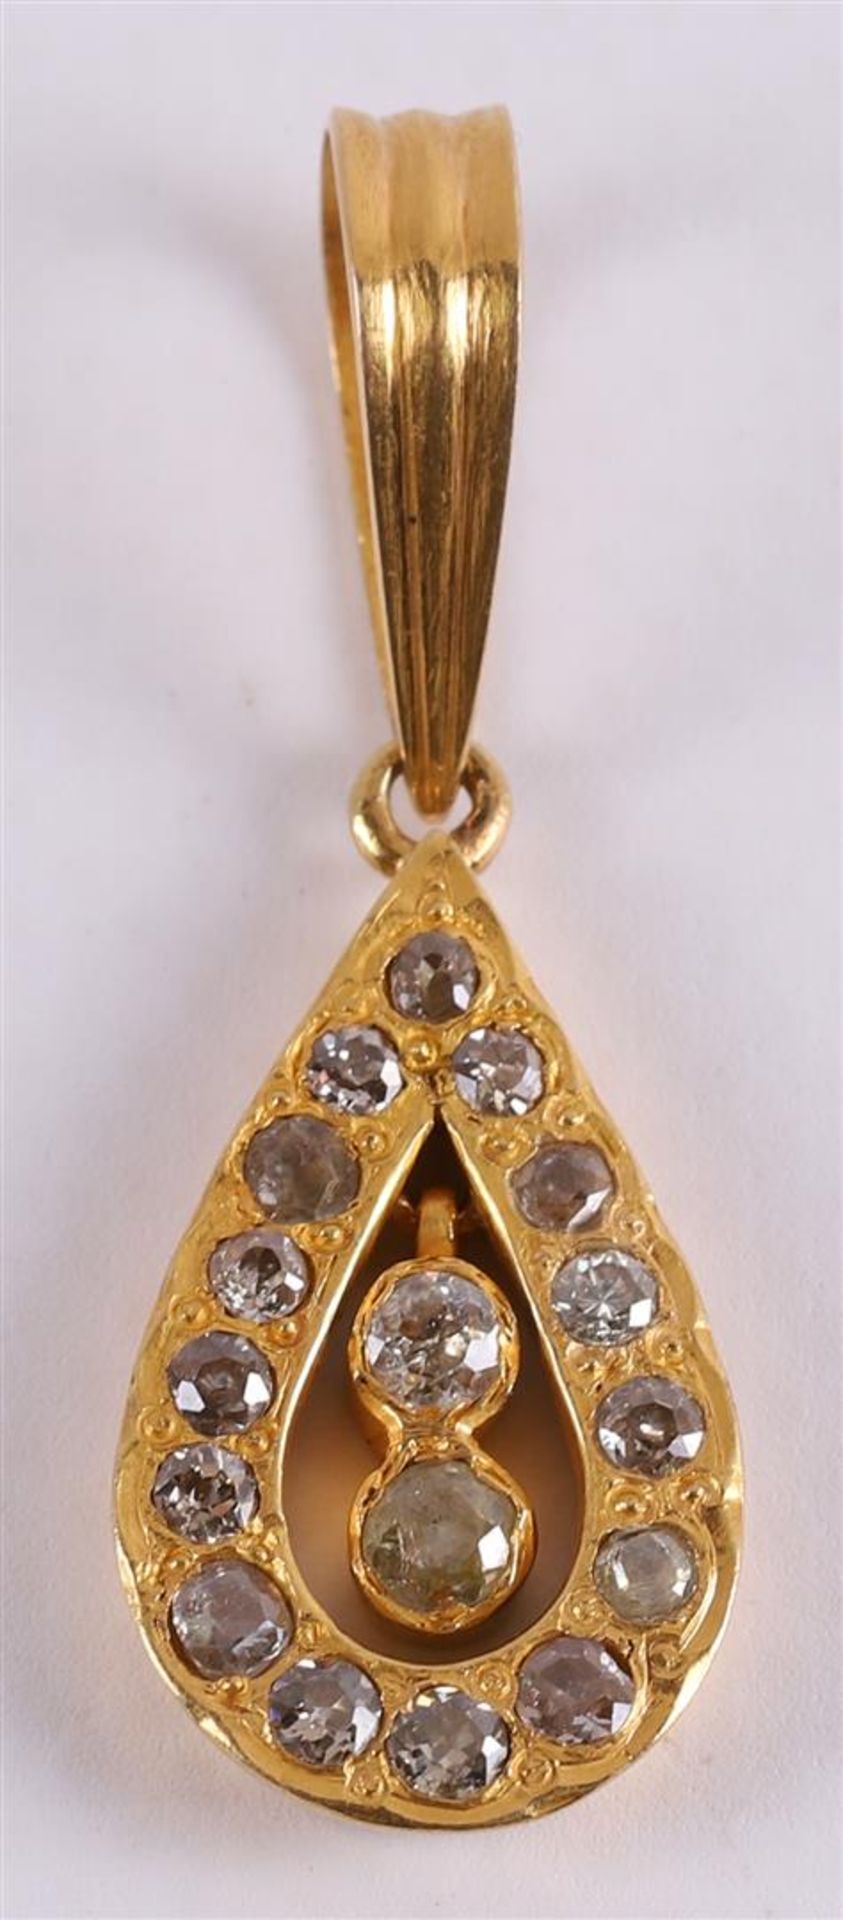 A 14 kt yellow gold drop-shaped pendant, set with 17 brilliant cut diamonds.